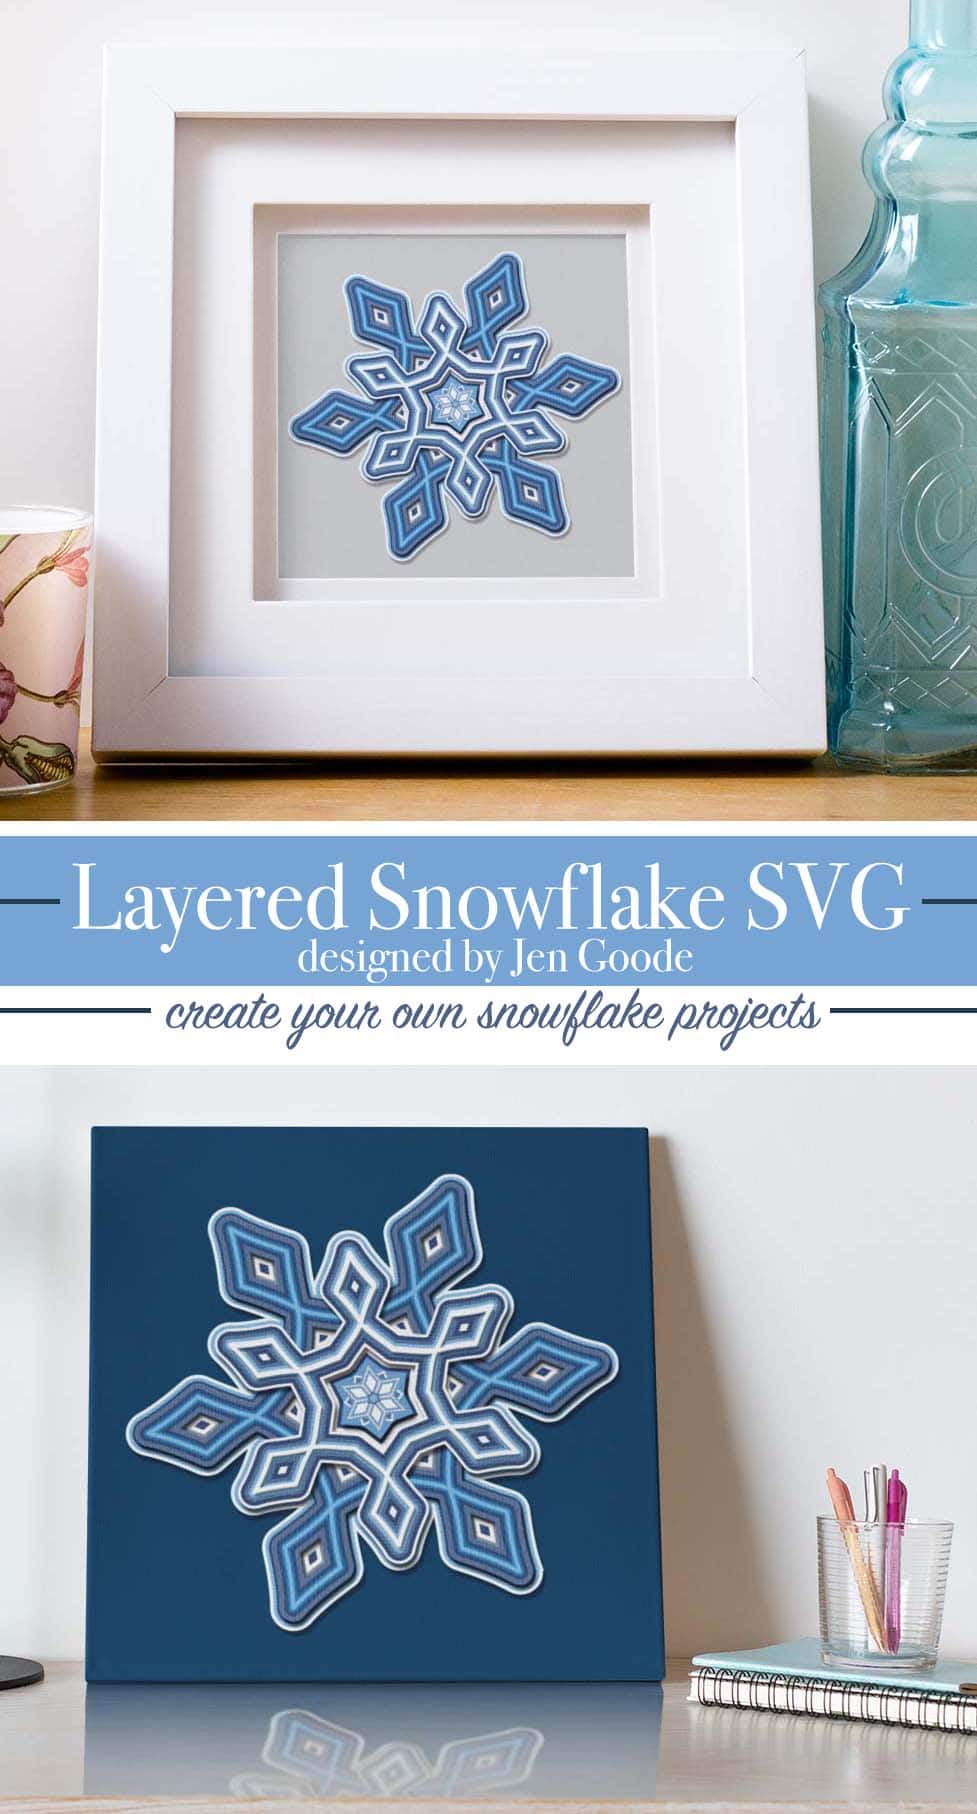 Snowflake SVG cut file designed by Jen Goode